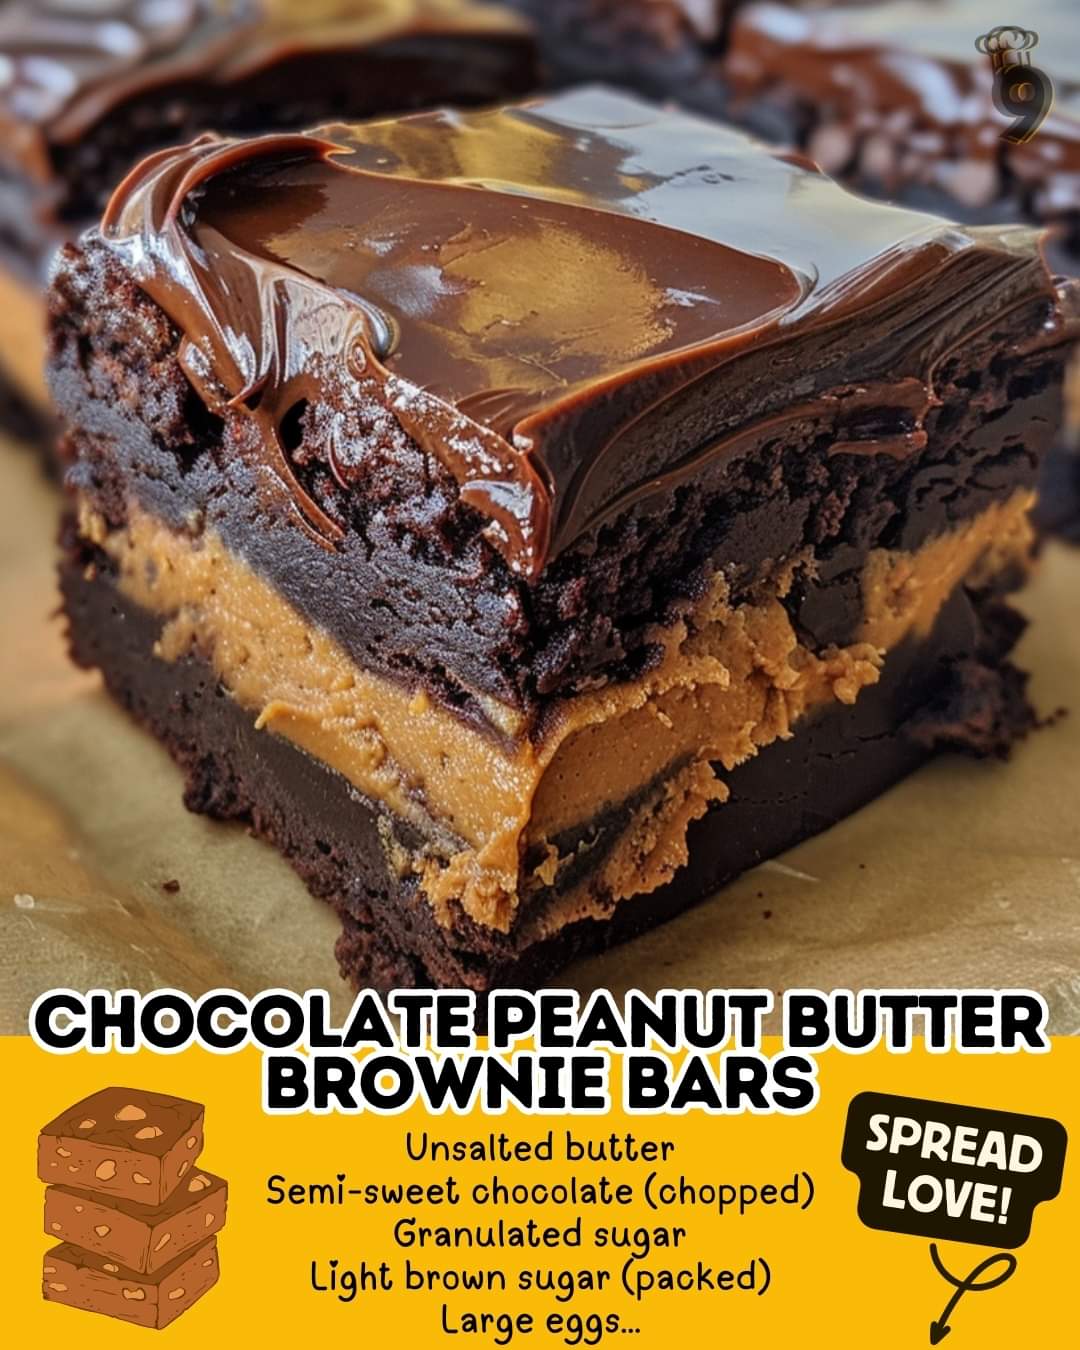 Chocolate Peanut Butter Brownie Bars: A Match Made in Dessert Heaven